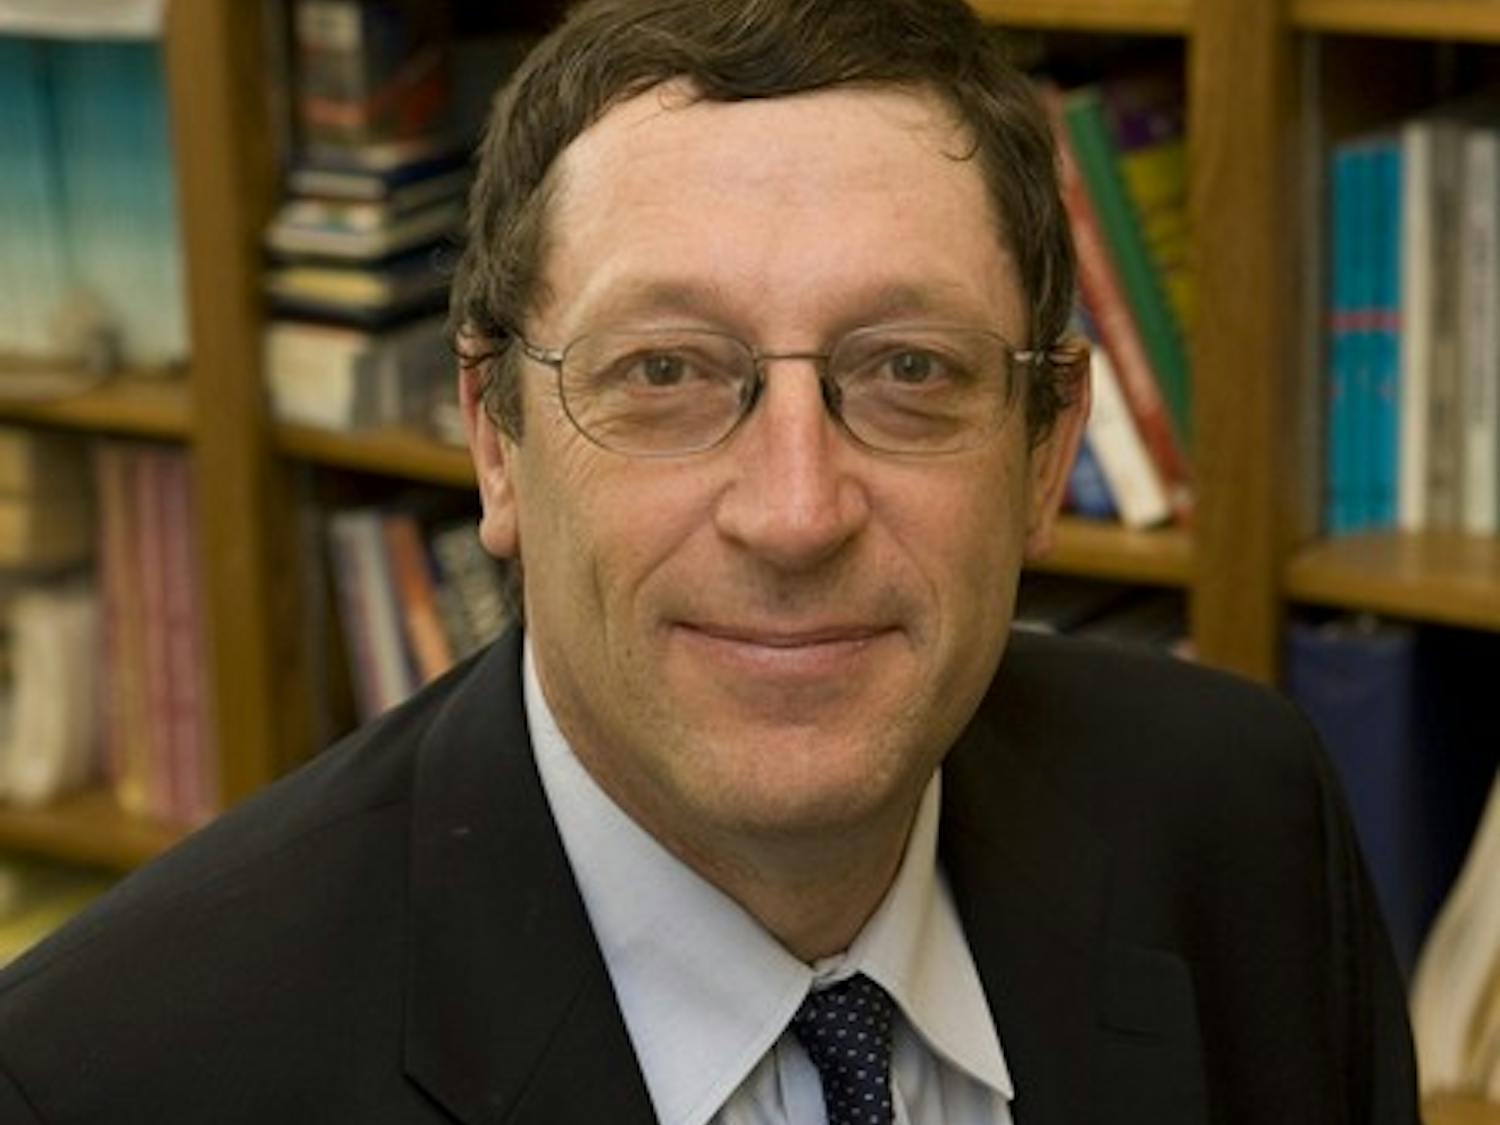 David G. Blanchflower, preferred name Danny G. Blanchflower, Professor of Economics